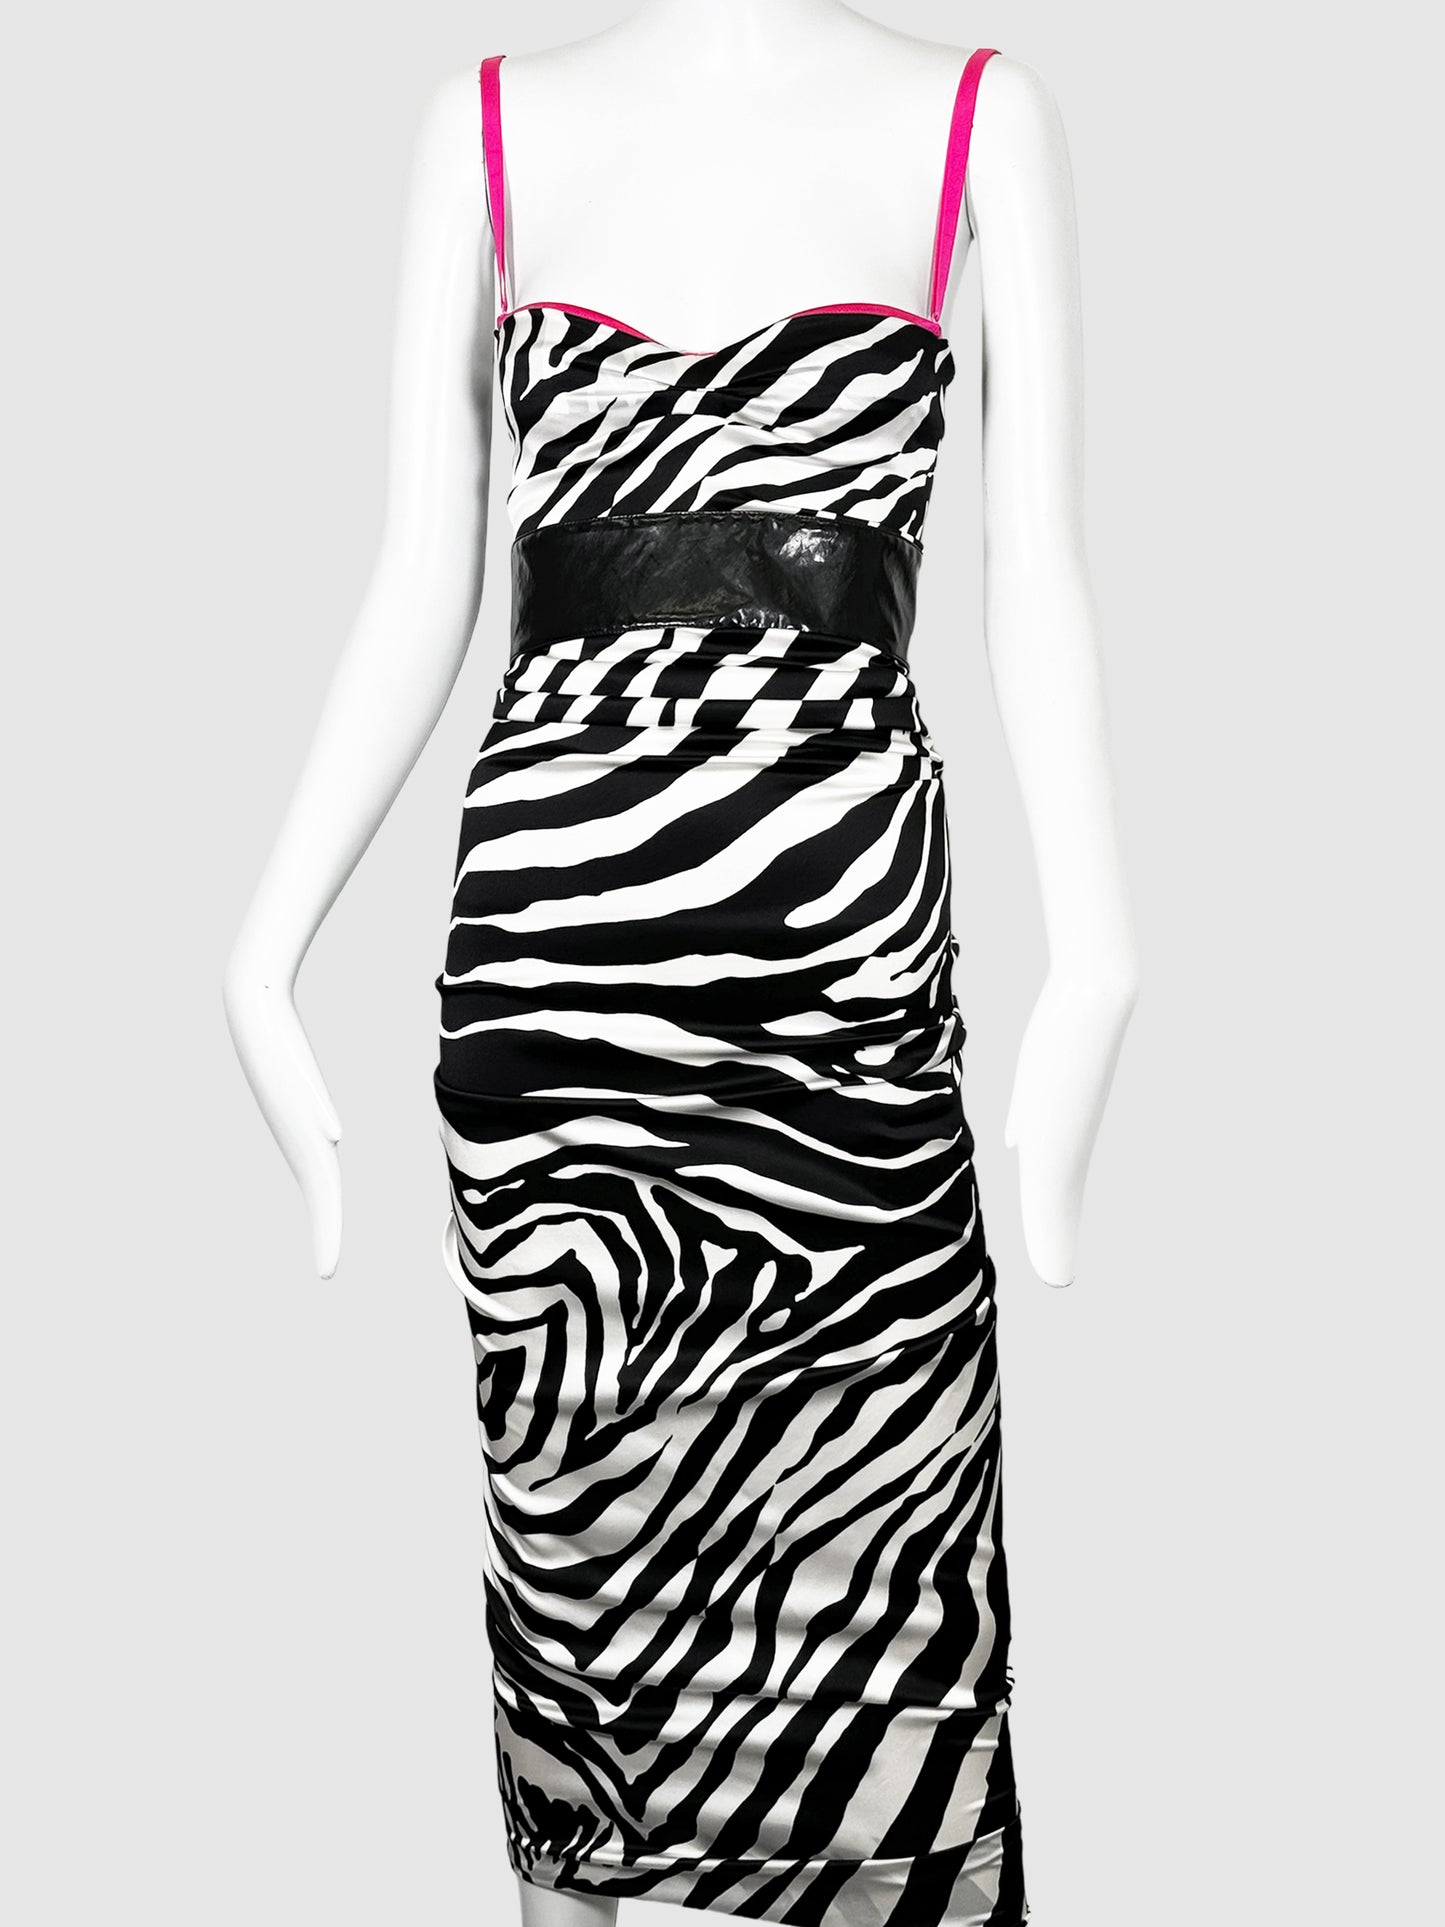 Dolce & Gabbana Zebra Print Dress - Size 38